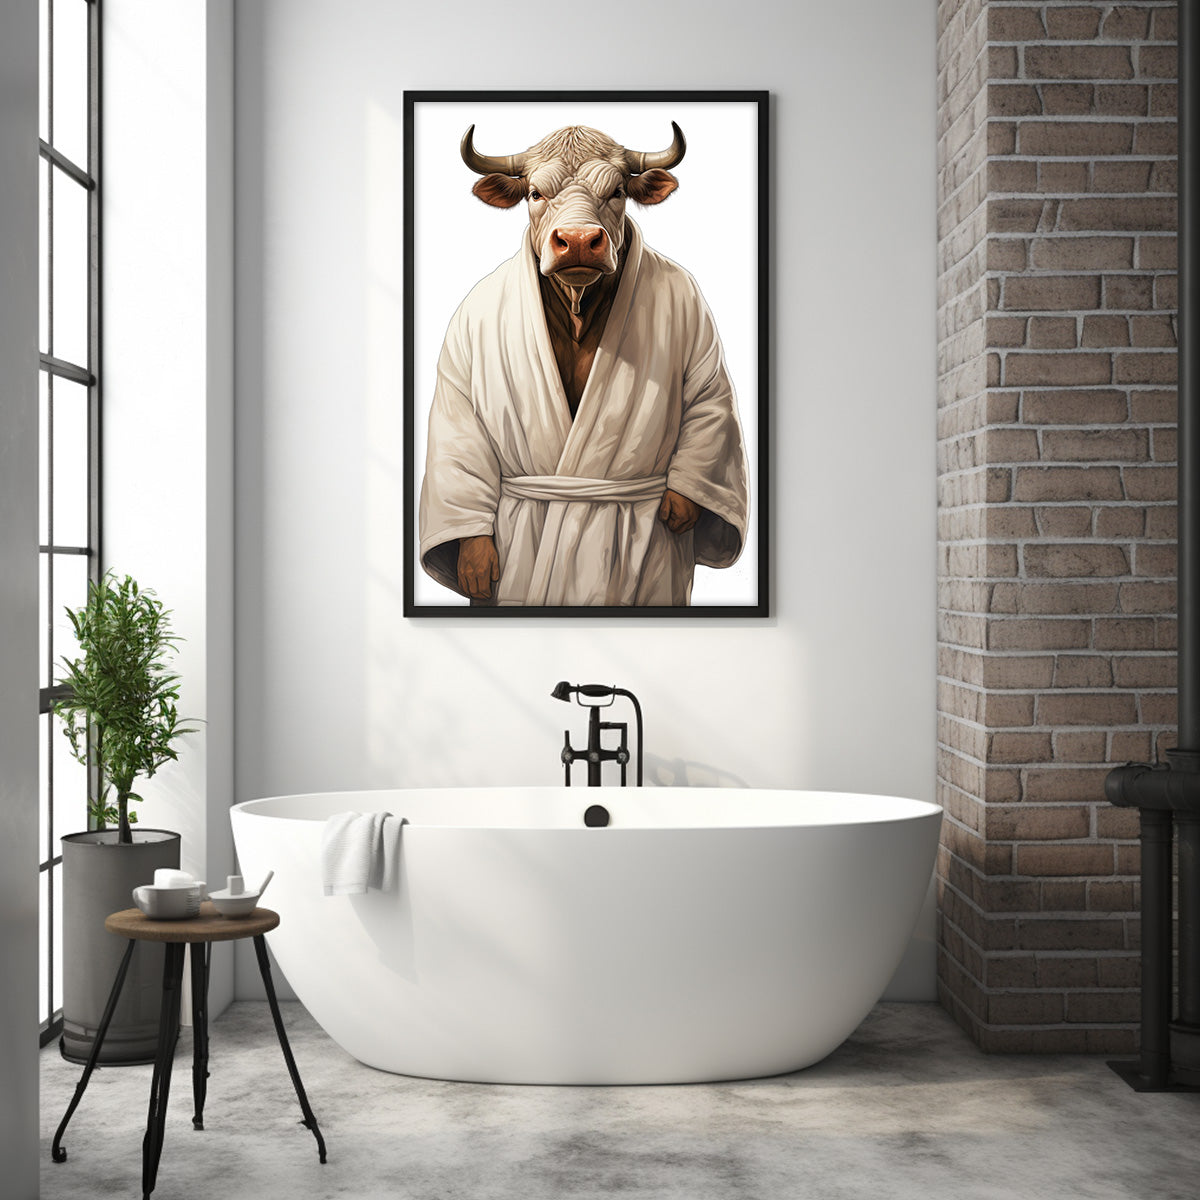 Highland Cow In Bathrobe, Cow Bathroom Decor, Minimalist Modern Farmhouse Art, Farmhouse Decor, Bathroom Wall Art, Funny Animal Print, Home Printables, Digital Download